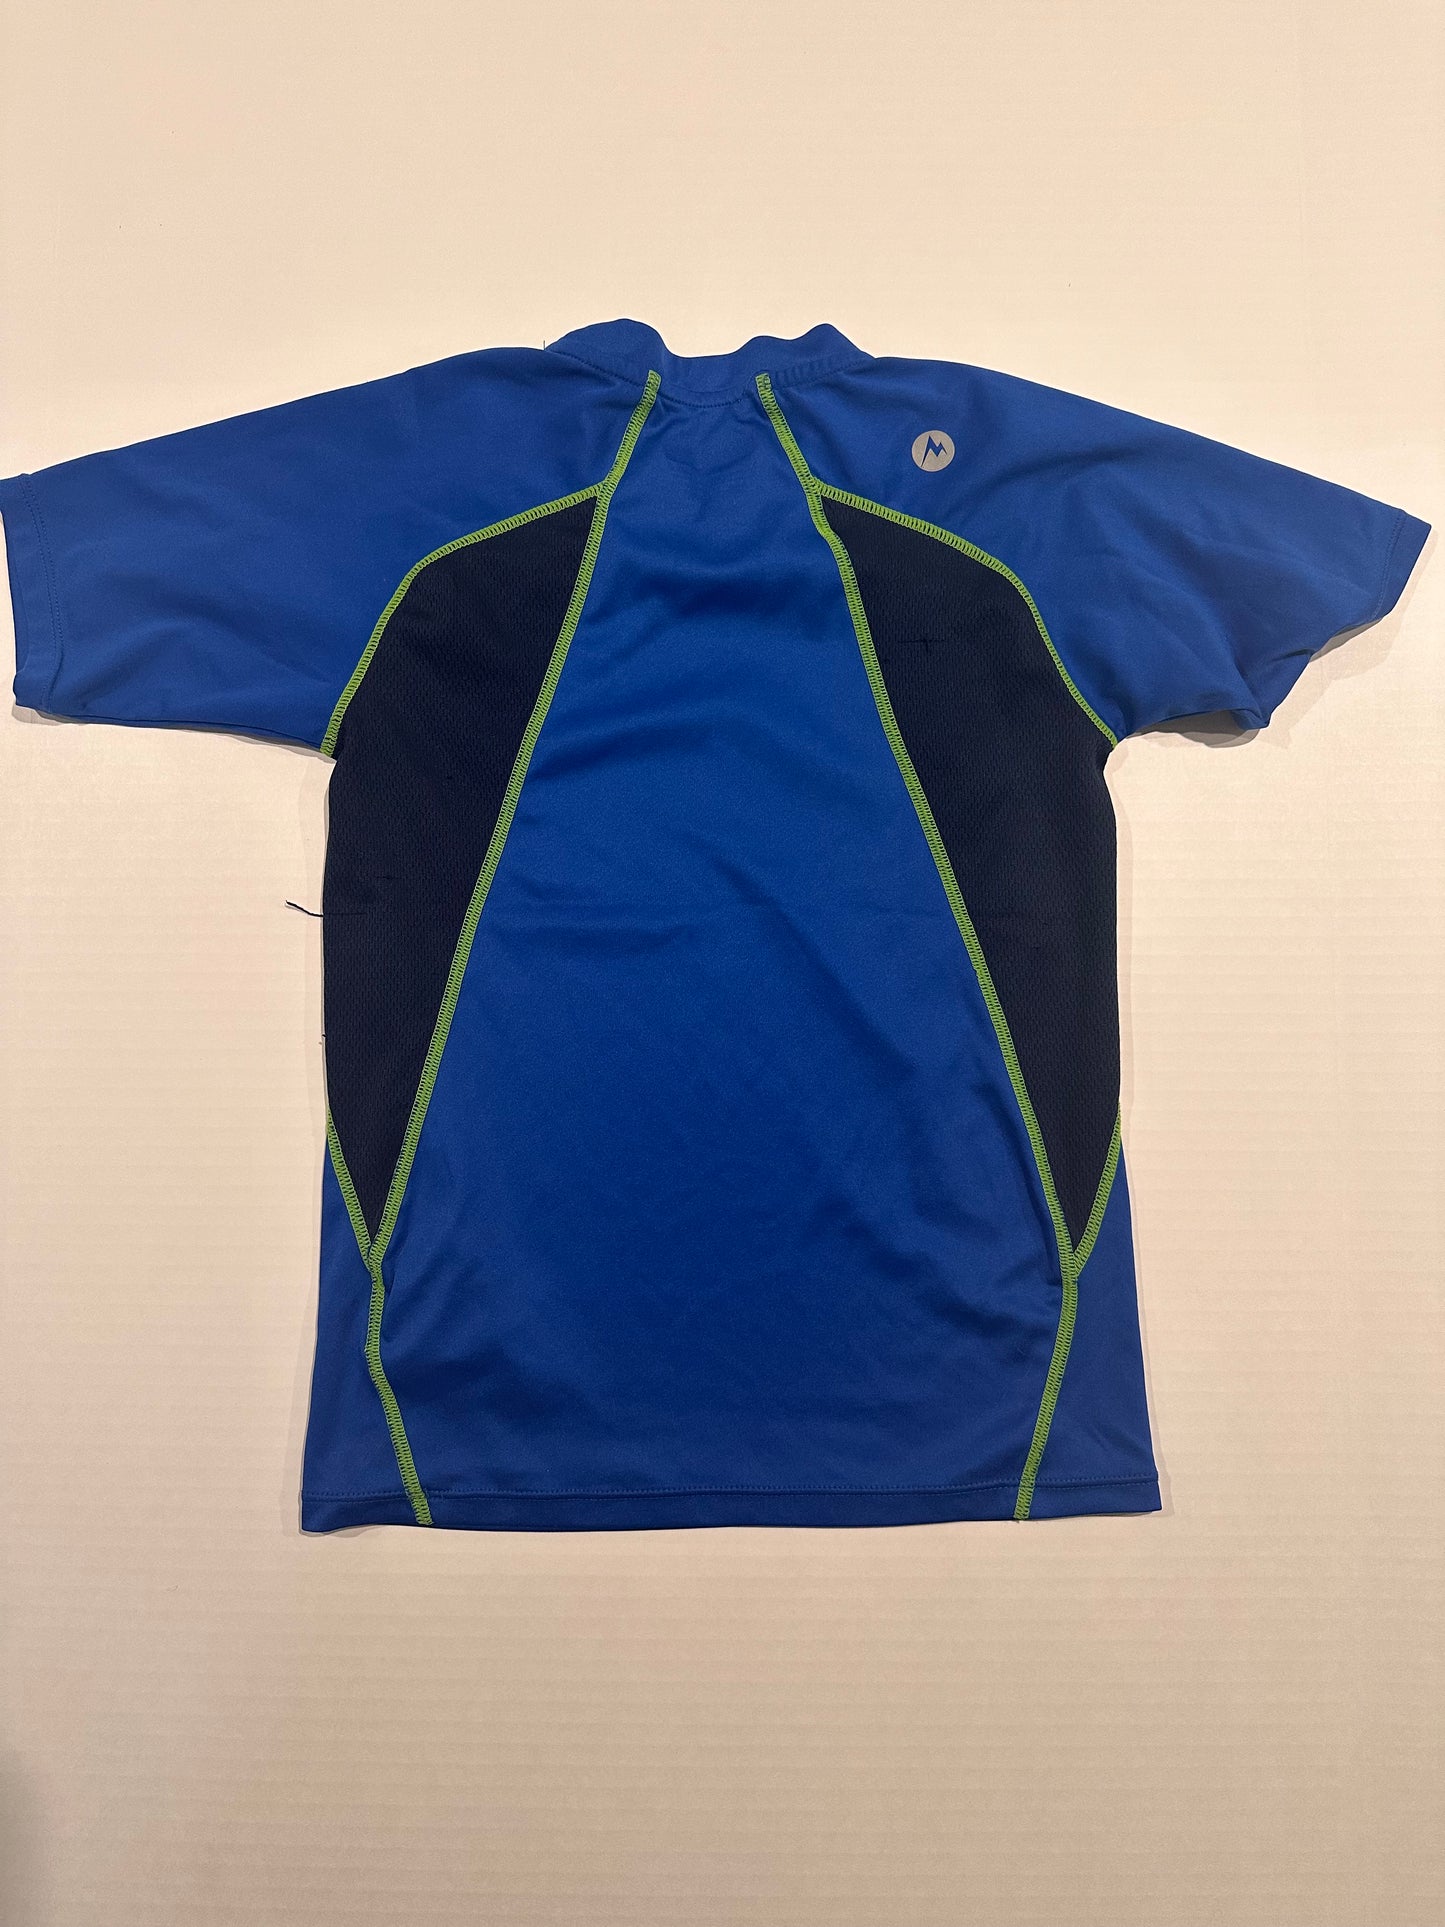 Marmot Boys size medium blue performance shirt